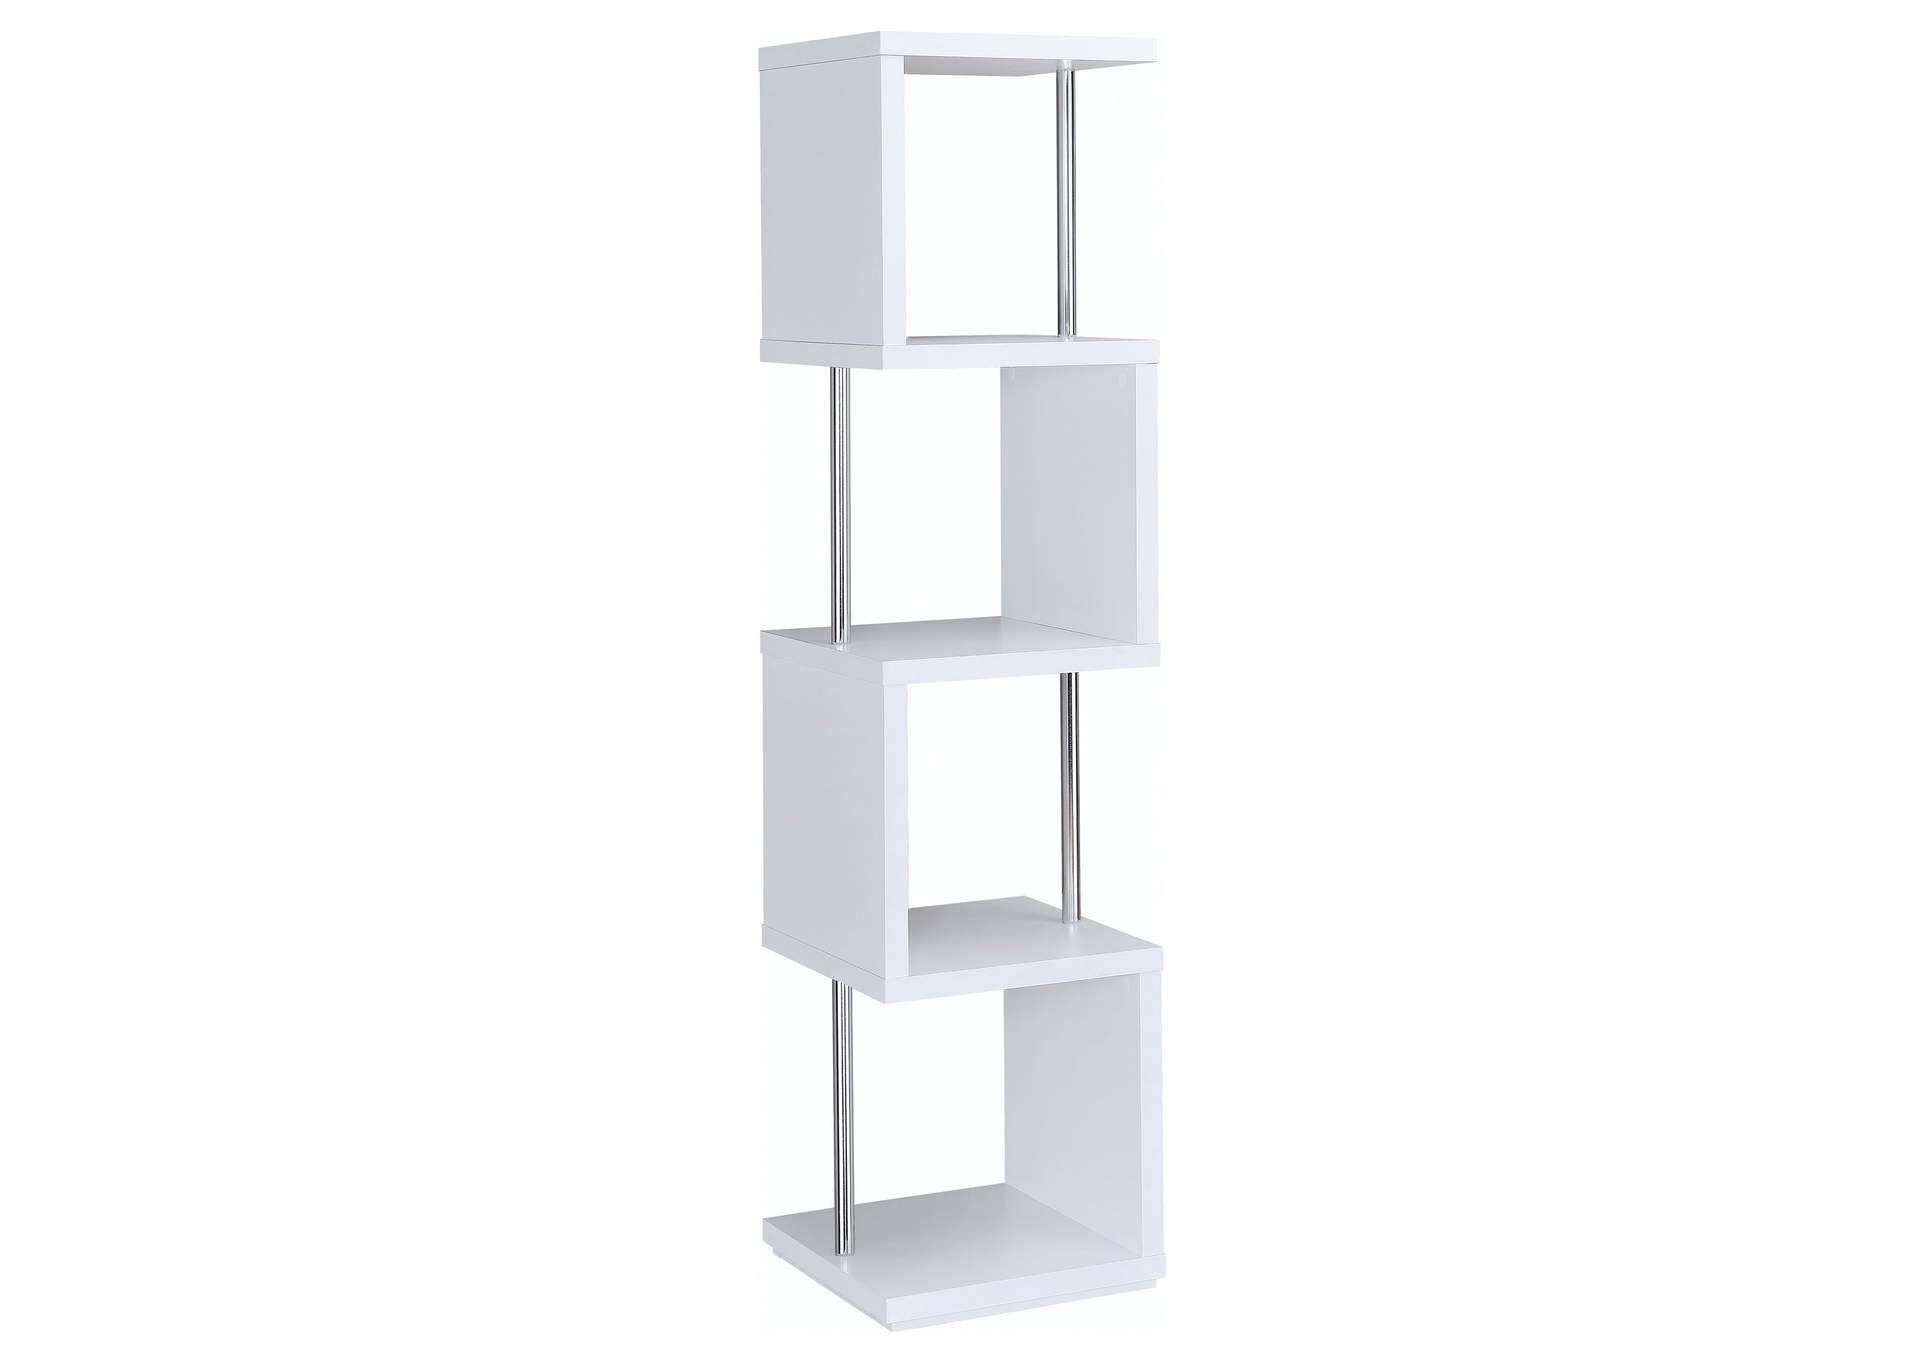 Baxter 4-shelf Bookcase White and Chrome,Coaster Furniture